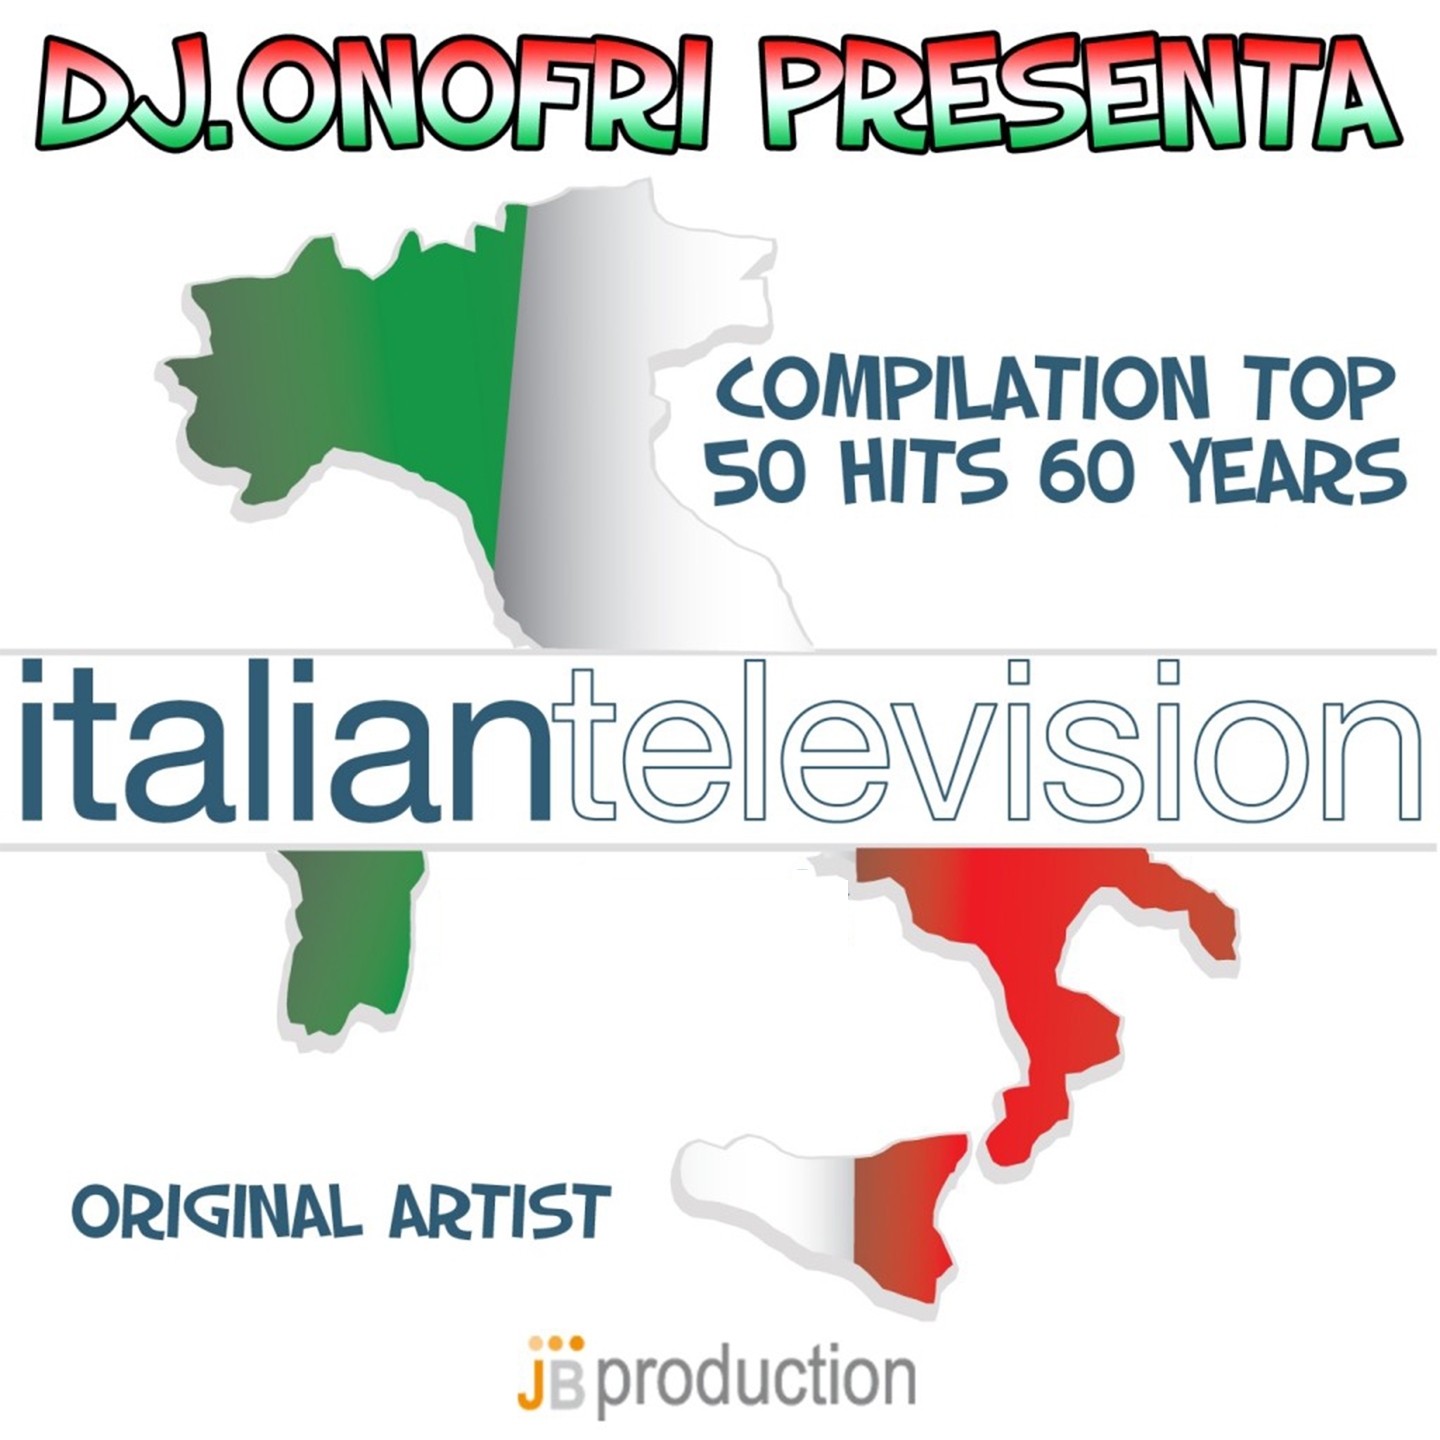 Italian Television Compilation: Top 50 Hits 60 Years (DJ Onofri Presenta)